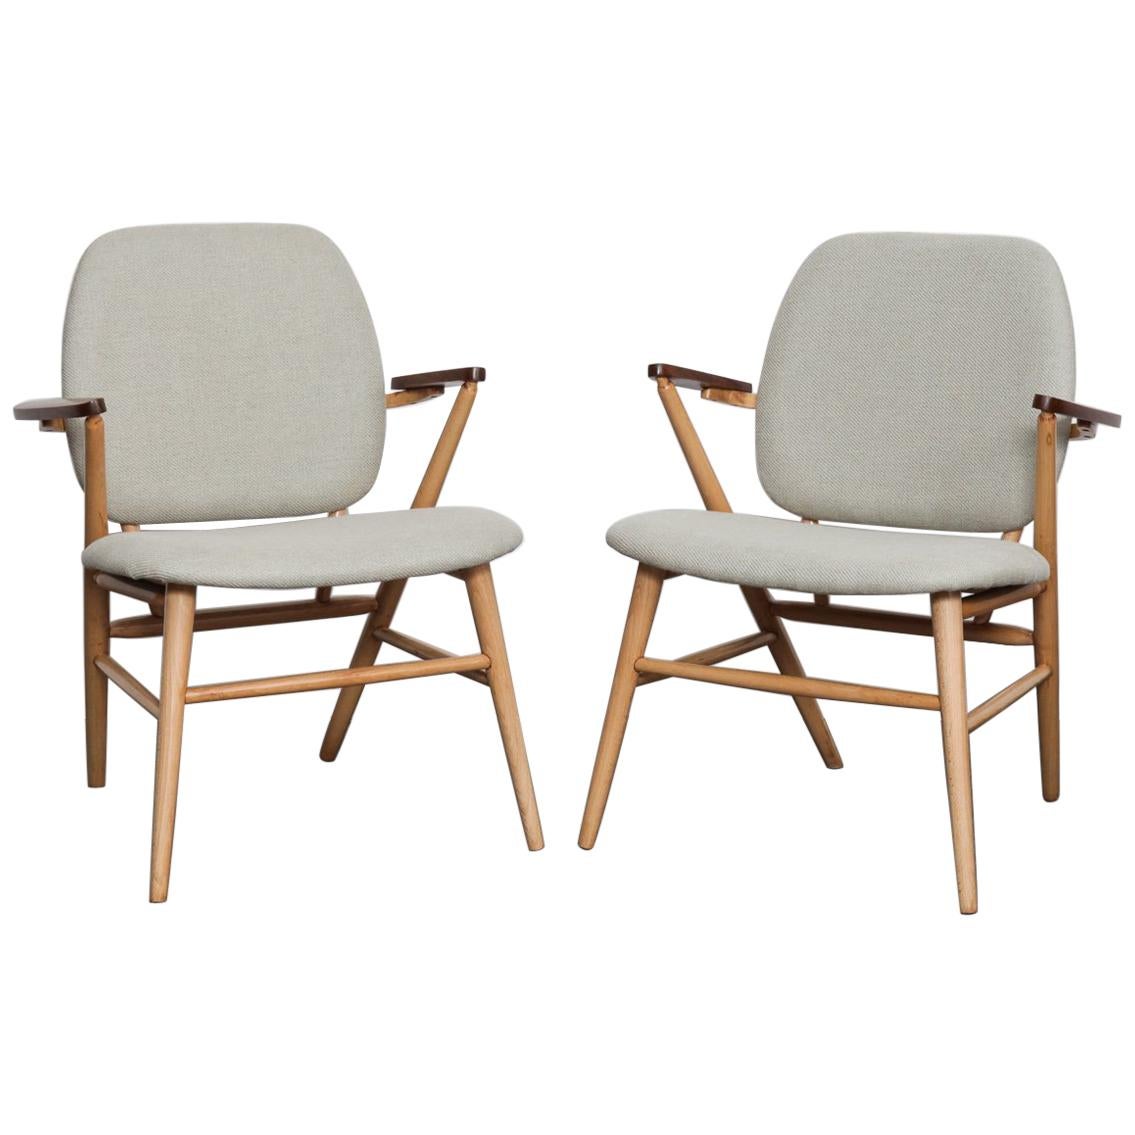 Swedish, 1950s Beech and Teak Side Chairs